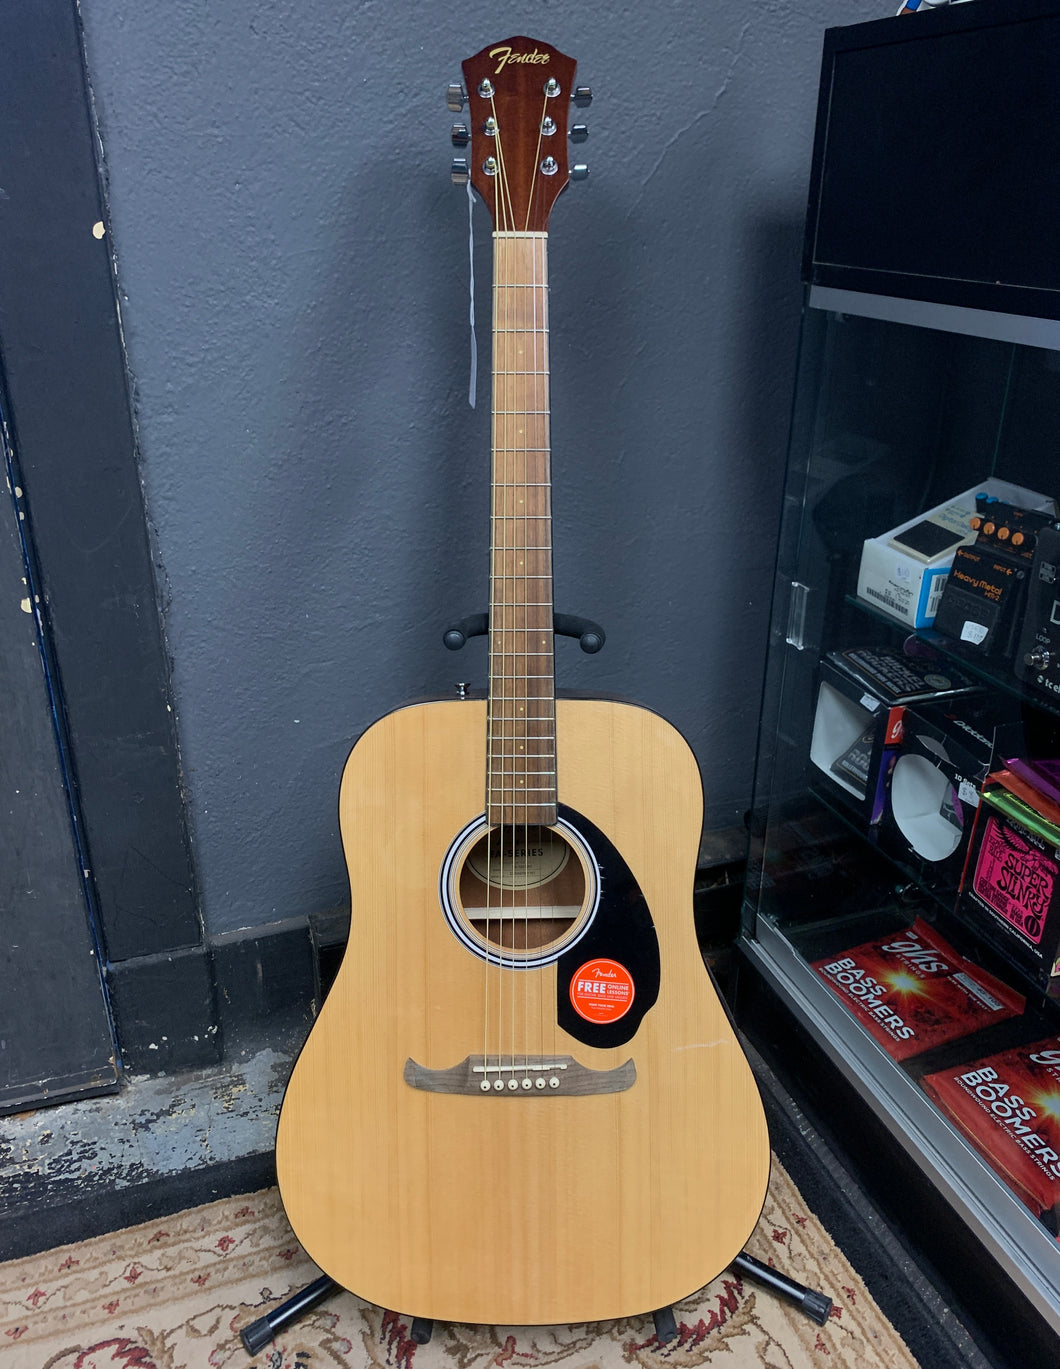 Used (Like New!) 2021 Fender FA125 Acoustic Guitar